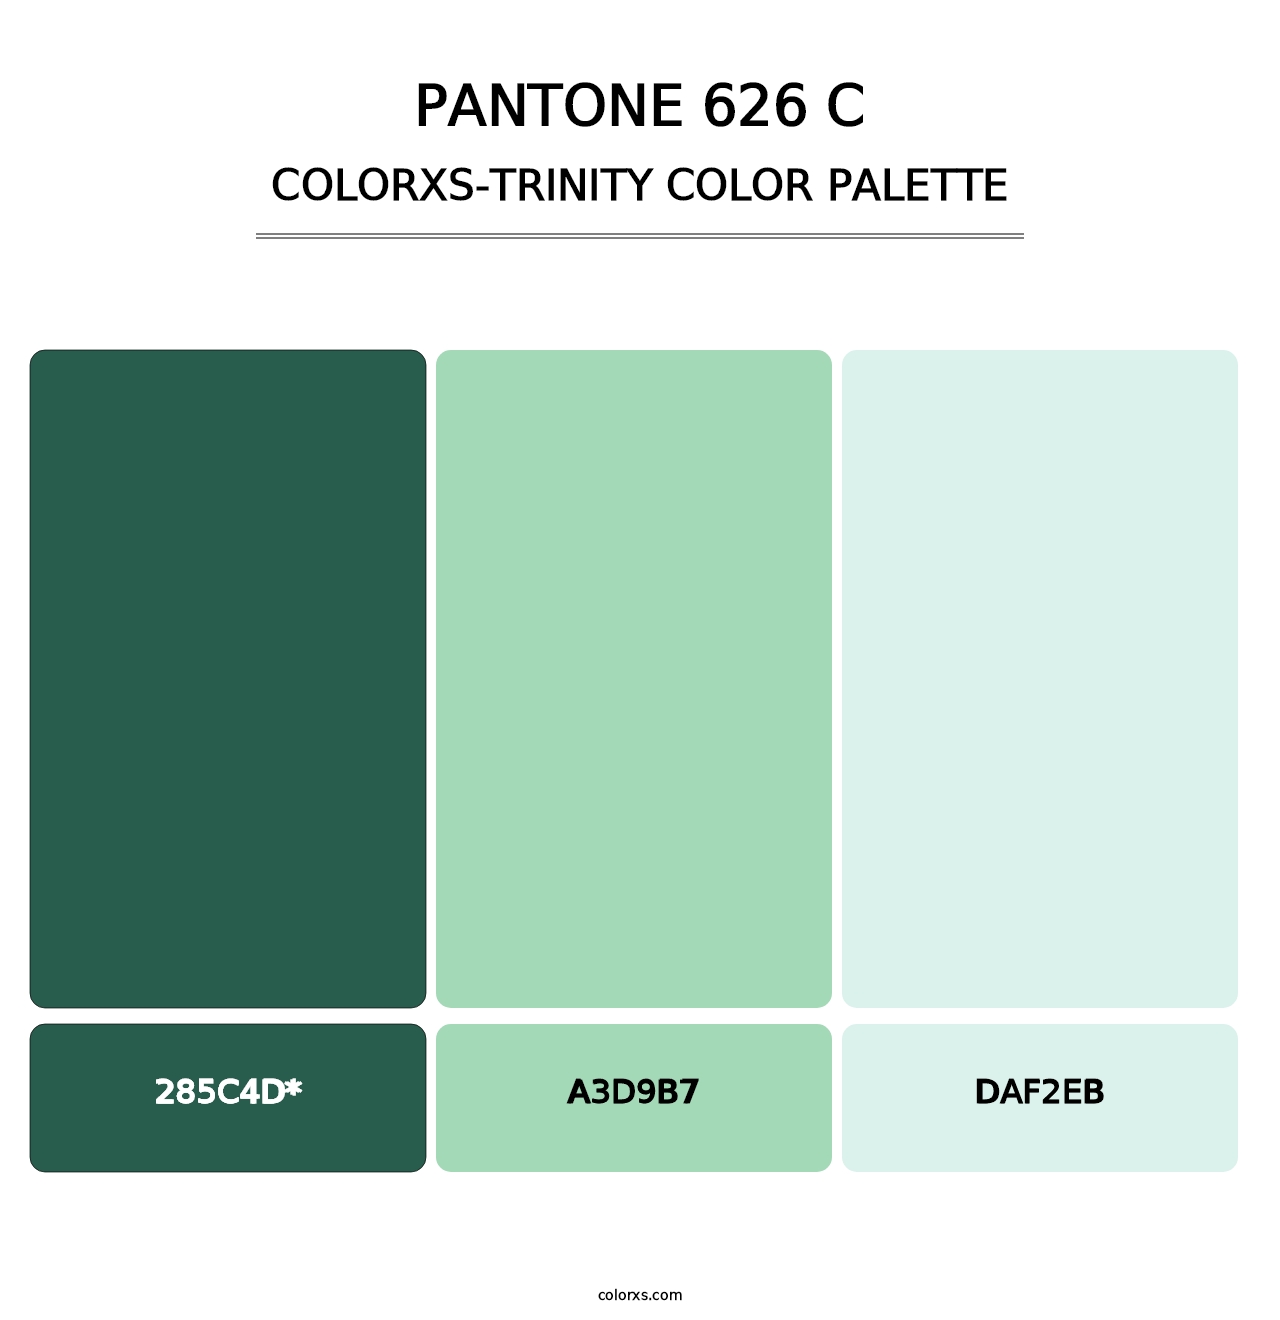 PANTONE 626 C - Colorxs Trinity Palette